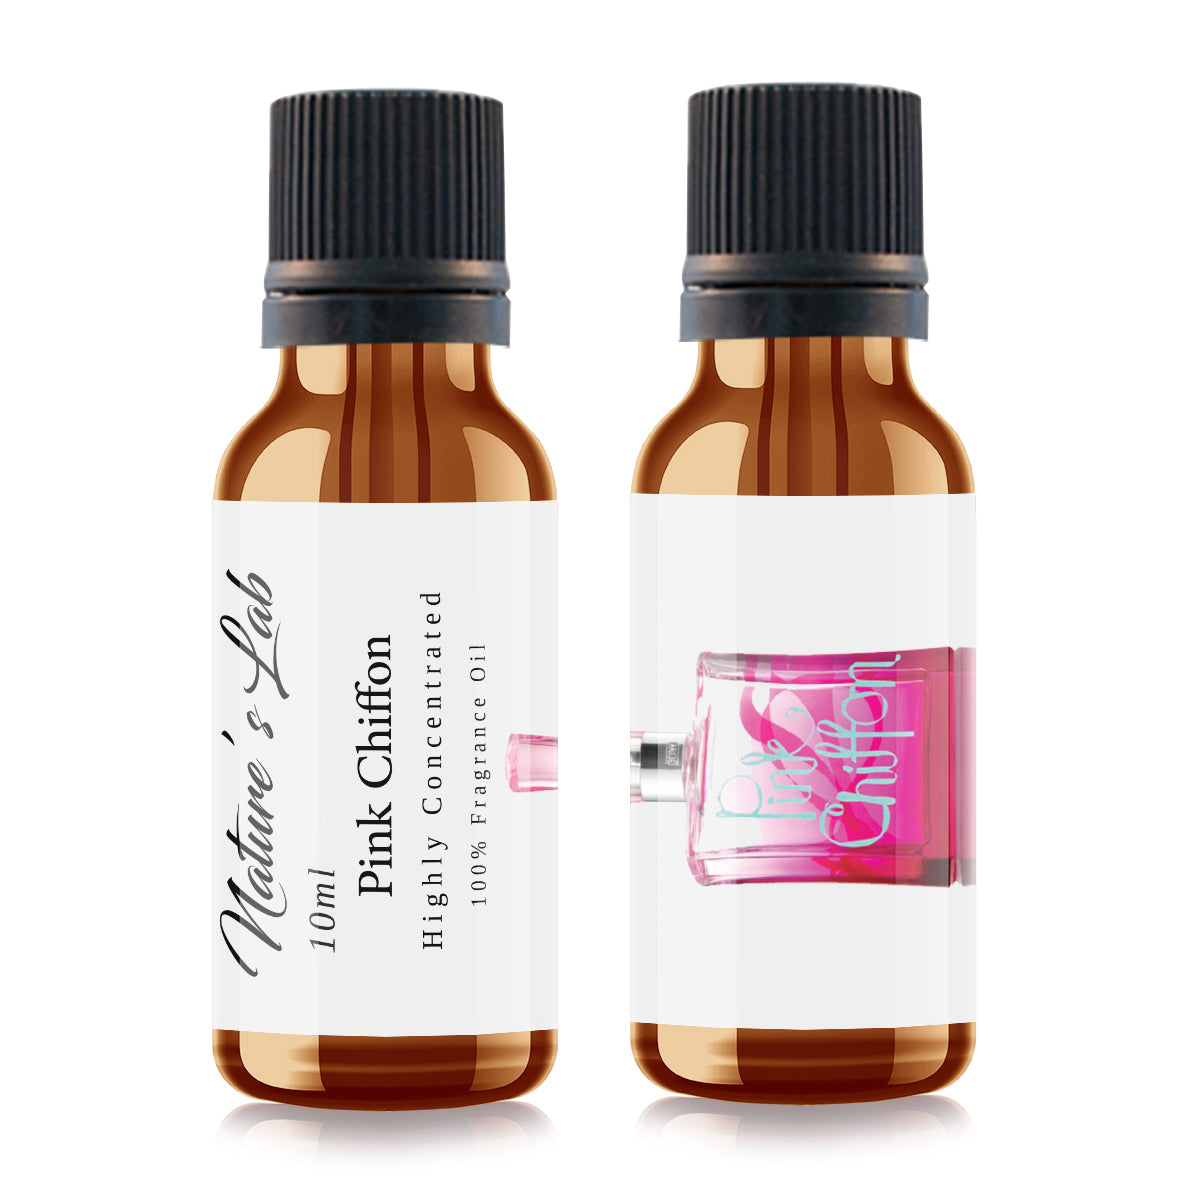 Pink Chiffon BBW Type Fragrance Oil